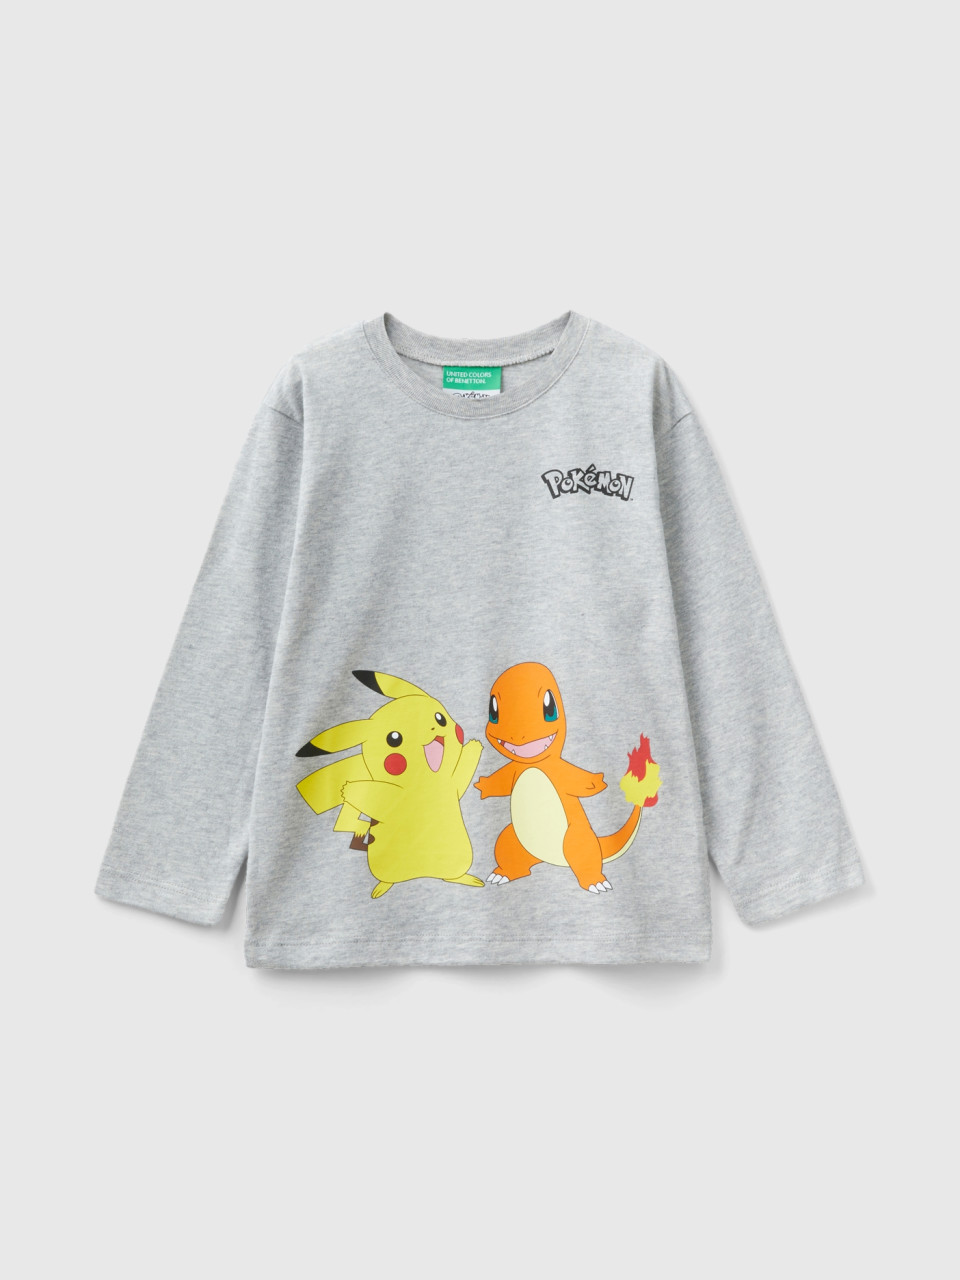 Benetton, 100% Cotton Pokémon T-shirt, Light Gray, Kids